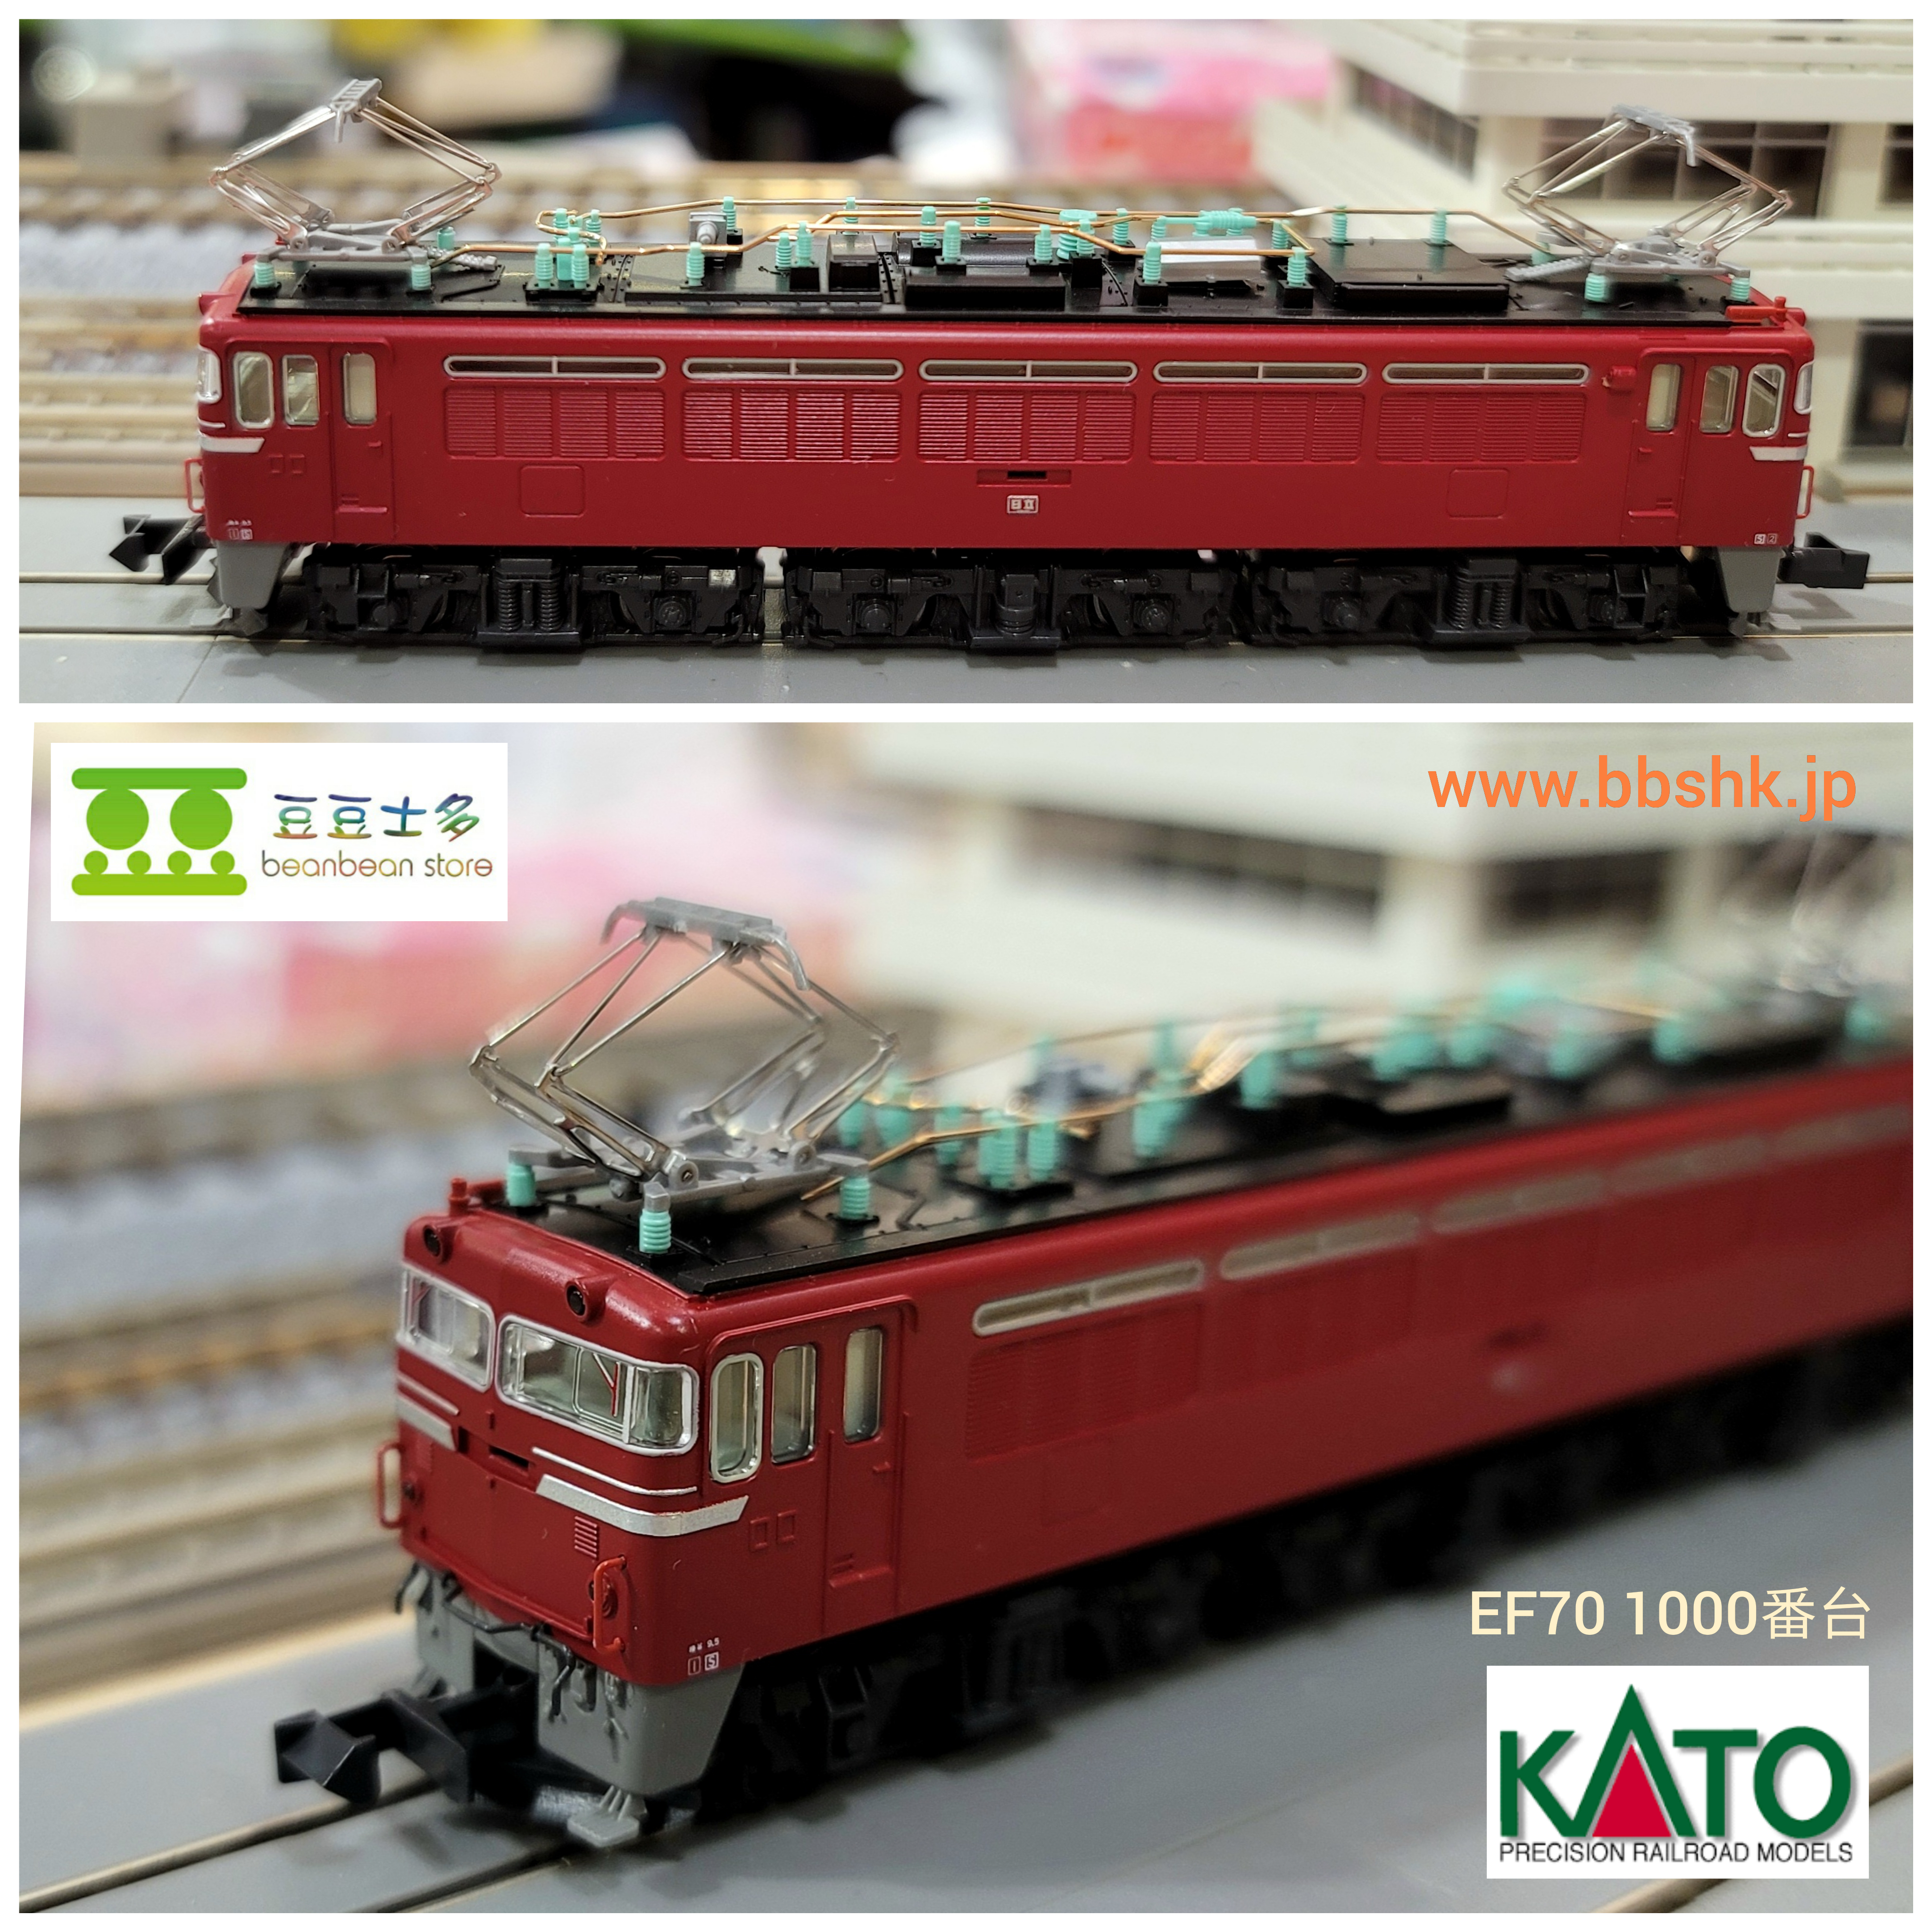 税込?送料無料 【新品未使用】KATO KATO 3081 EF70 1000 鉄道模型 N 